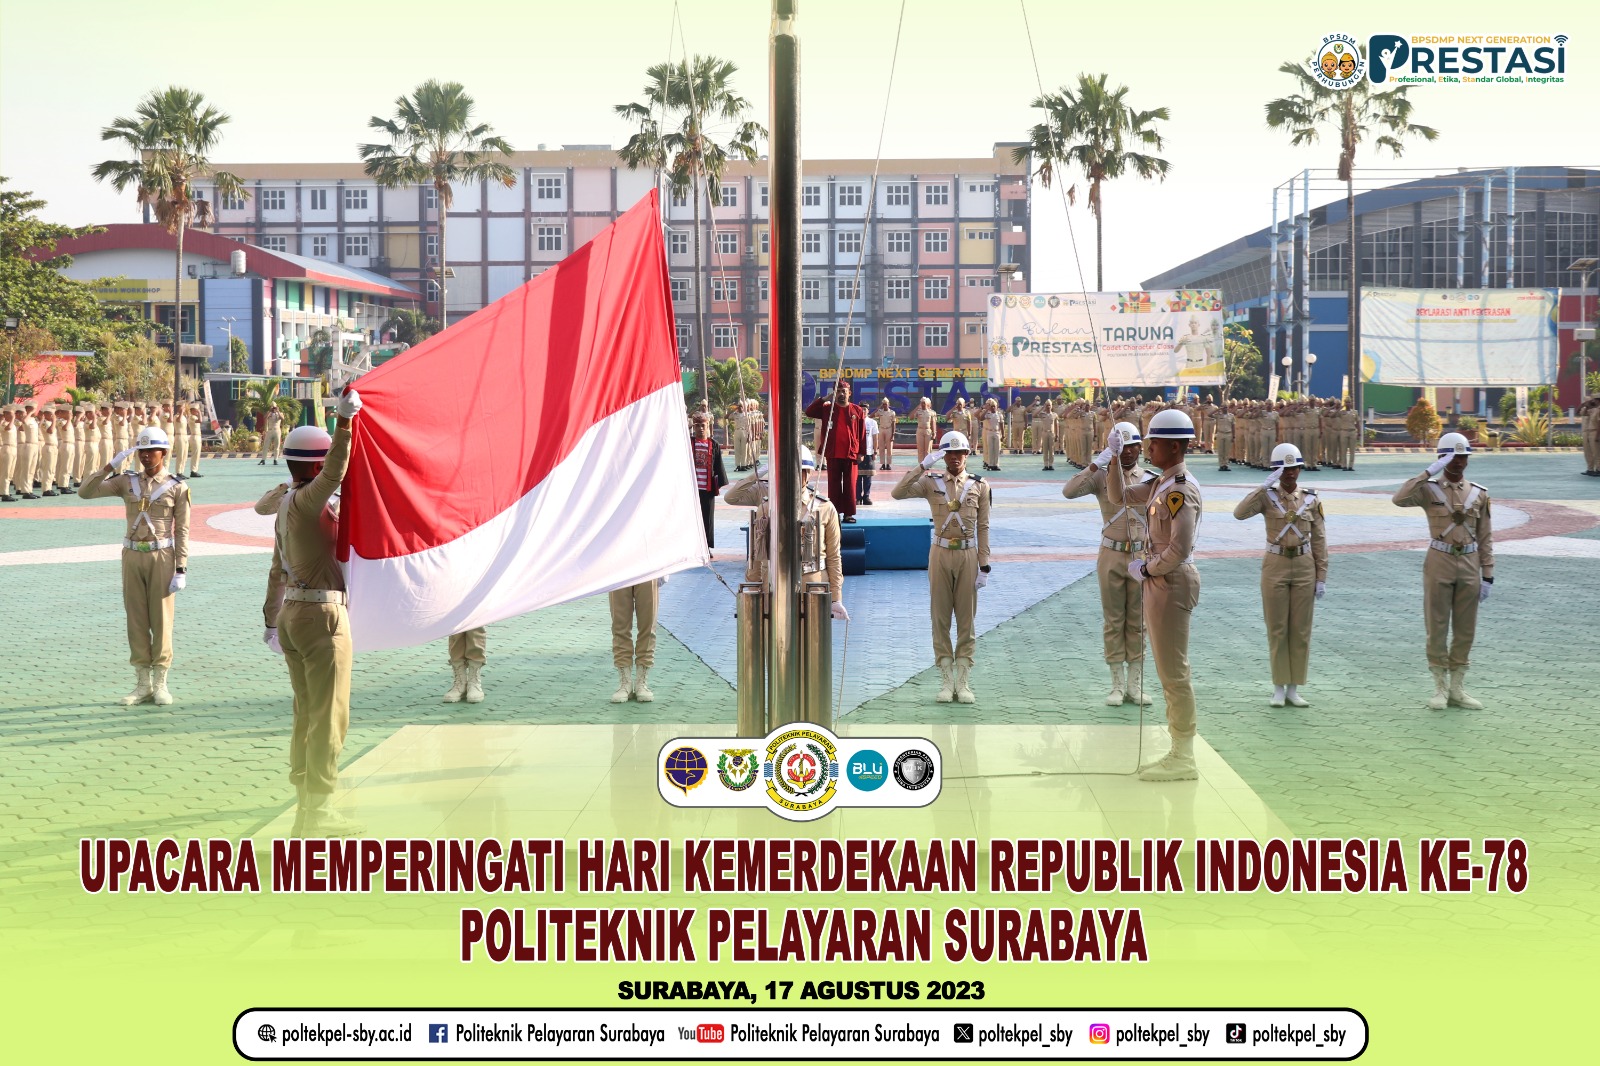 DIREKTUR POLTEKPEL SURABAYA PIMPIN UPACARA PERINGATAN HARI KEMERDEKAAN ke-78 REPUBLIK INDONESIA